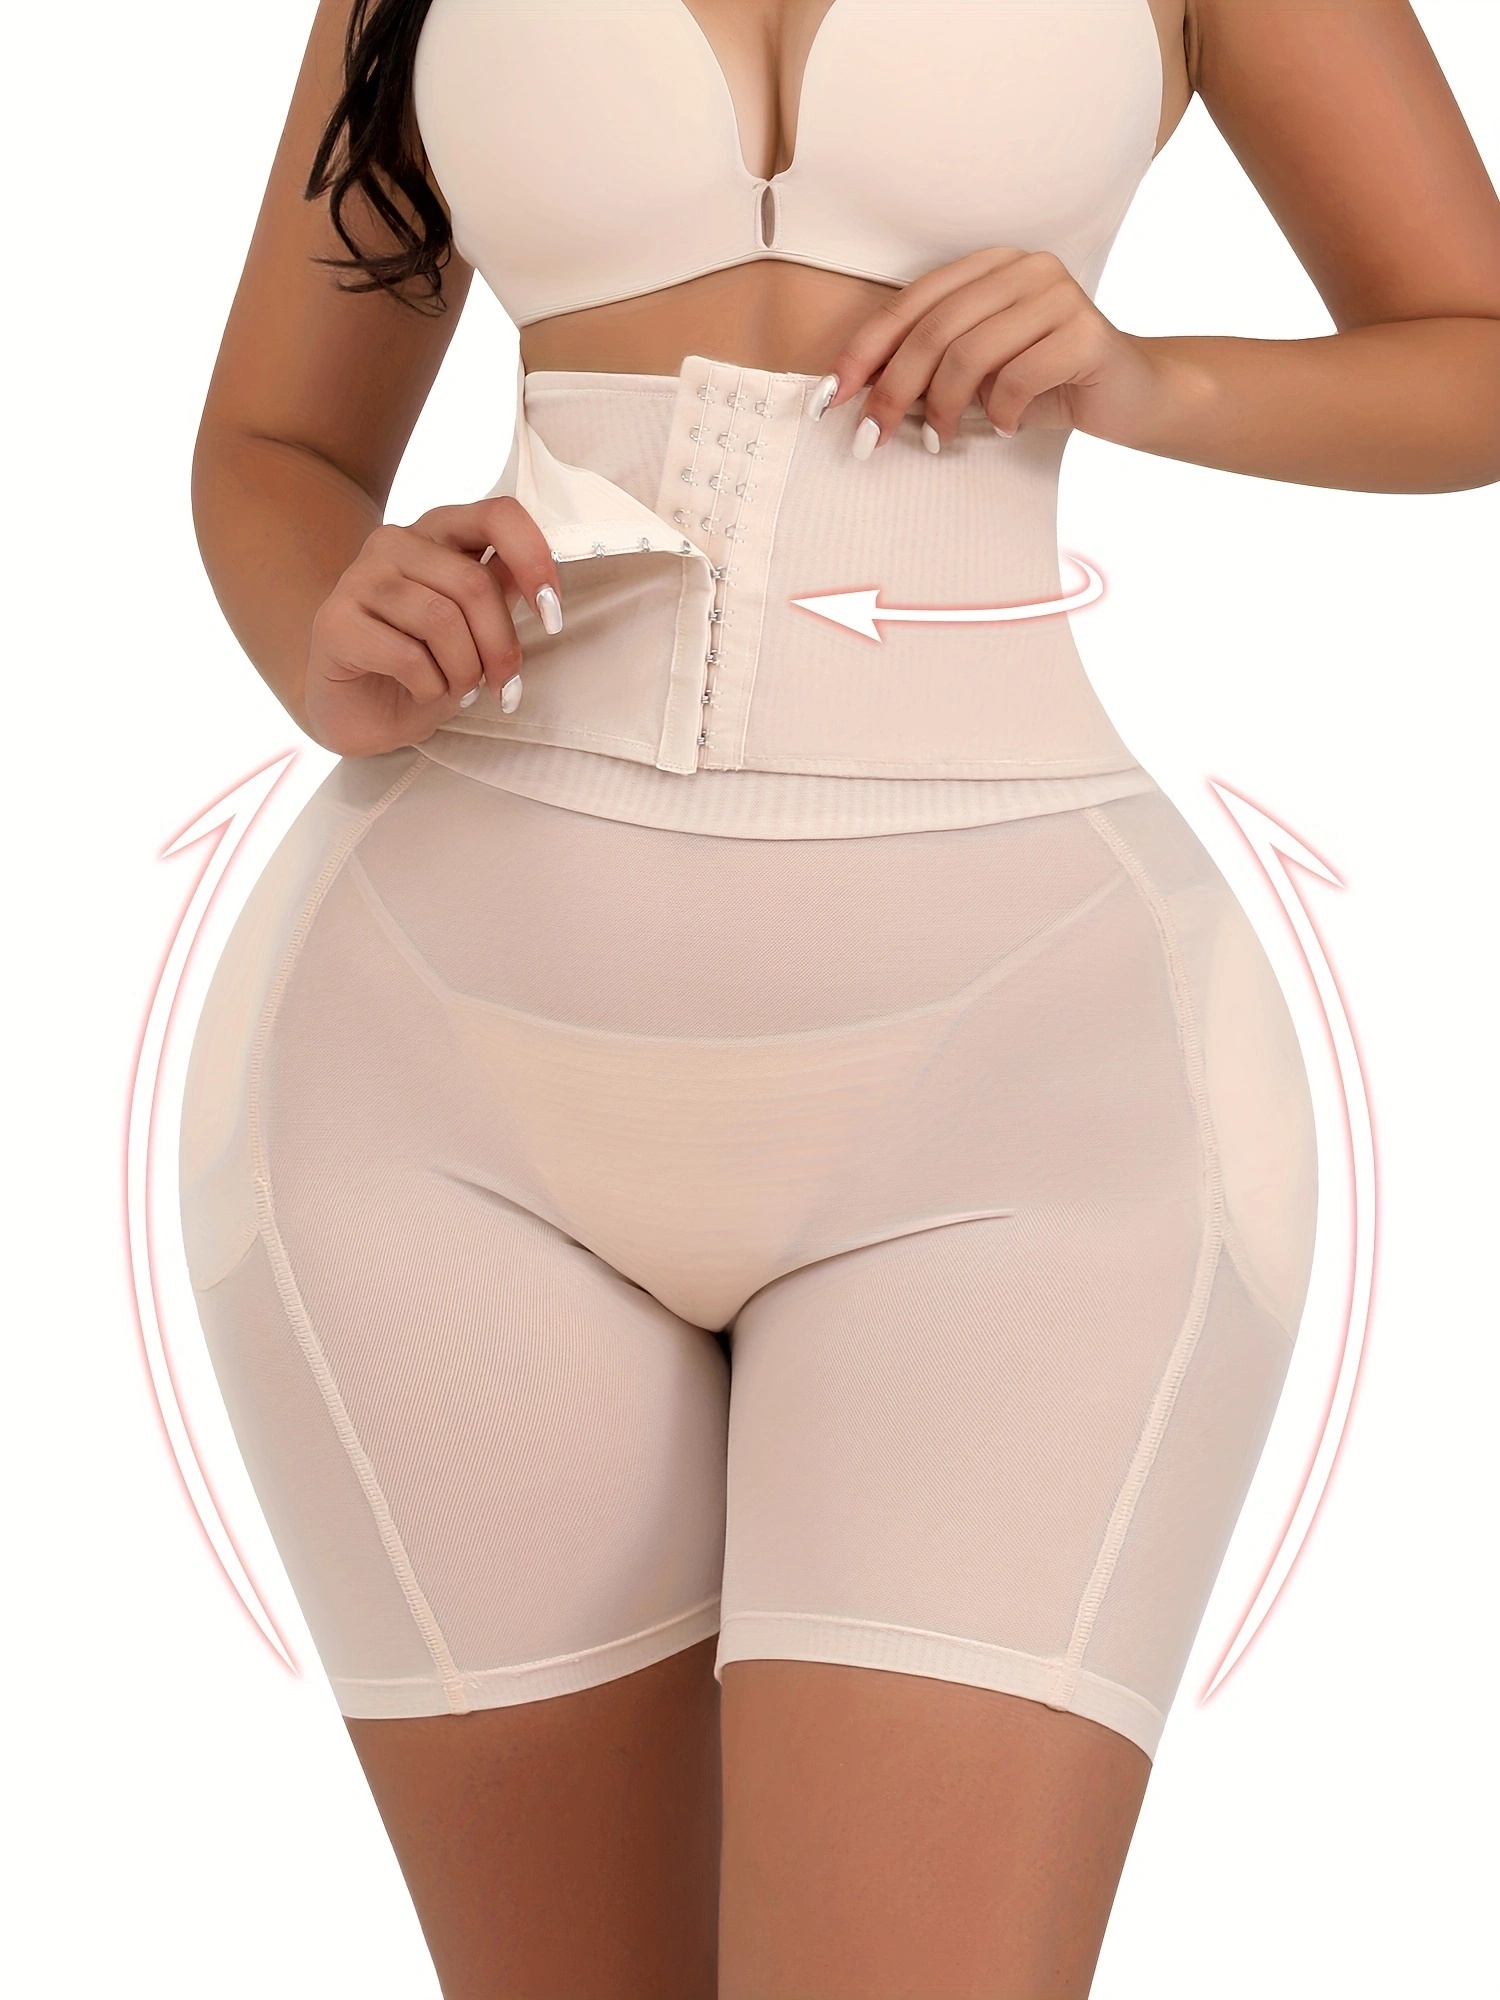 Comfort Slimming Undergarment Body Shaper Size L 2Pcs Black and Beige, undergarment